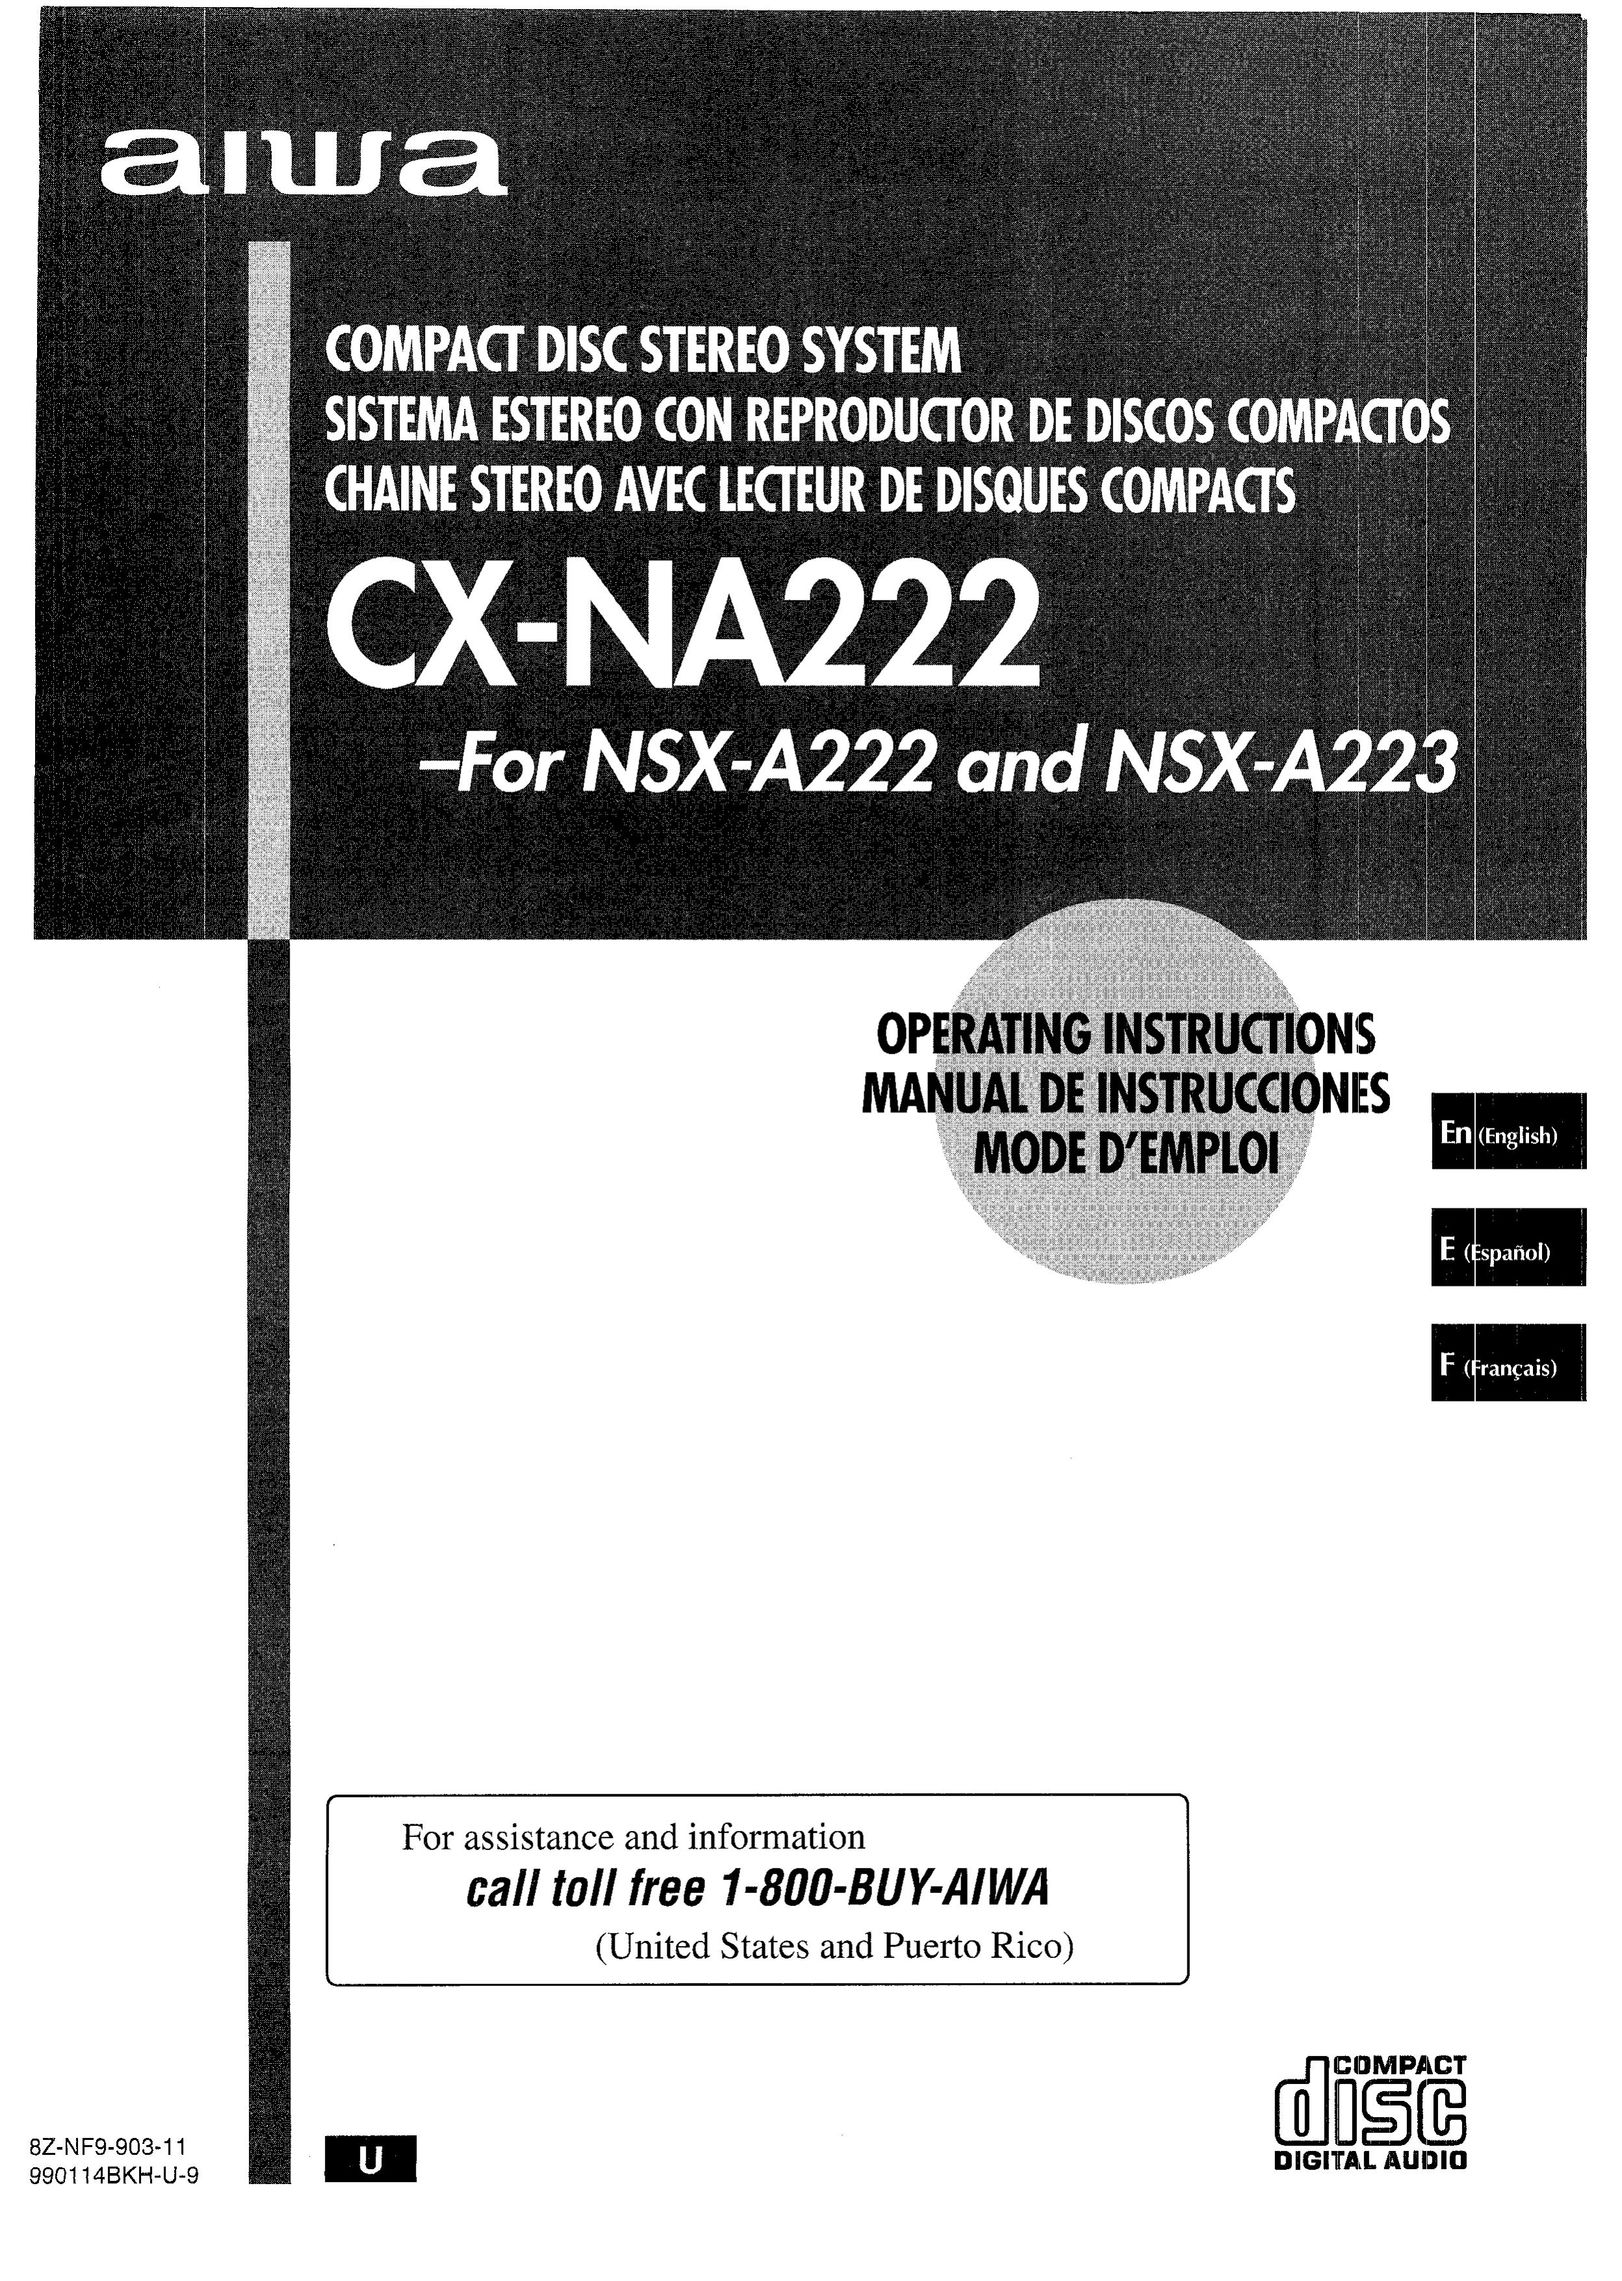 Aiwa CX-NA222 CD Player User Manual (Page 1)